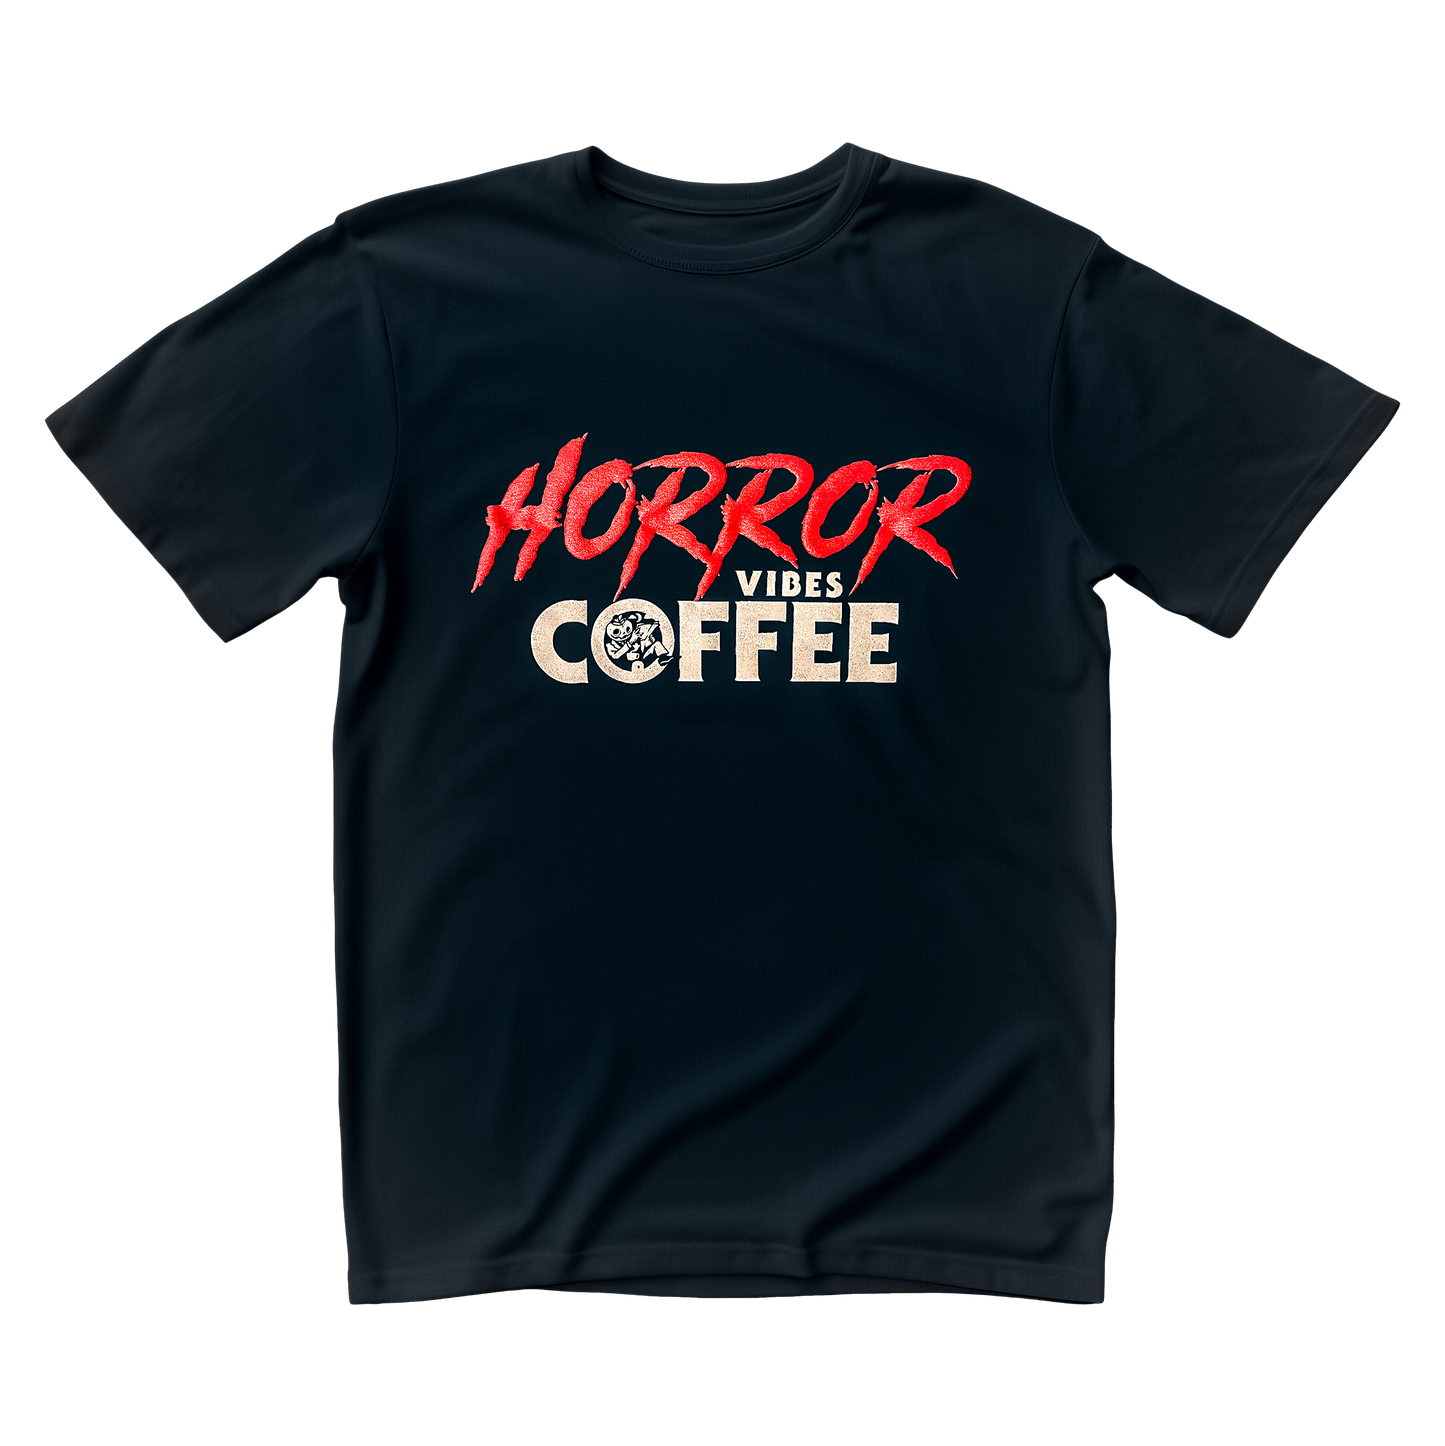 "HORROR VIBES COFFEE" t-shirt